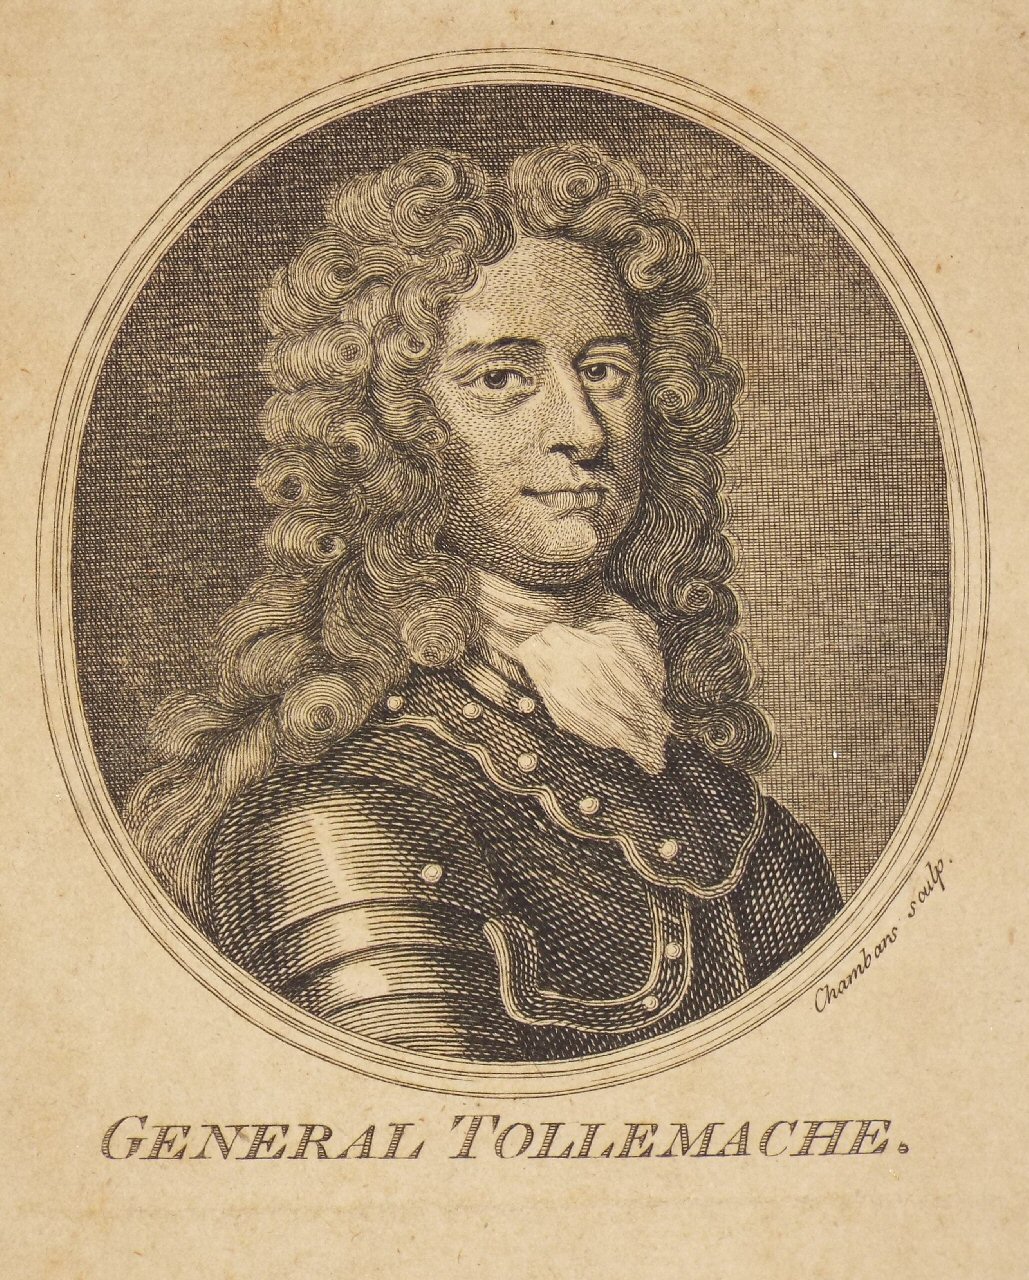 Print - General Tollemache. - 